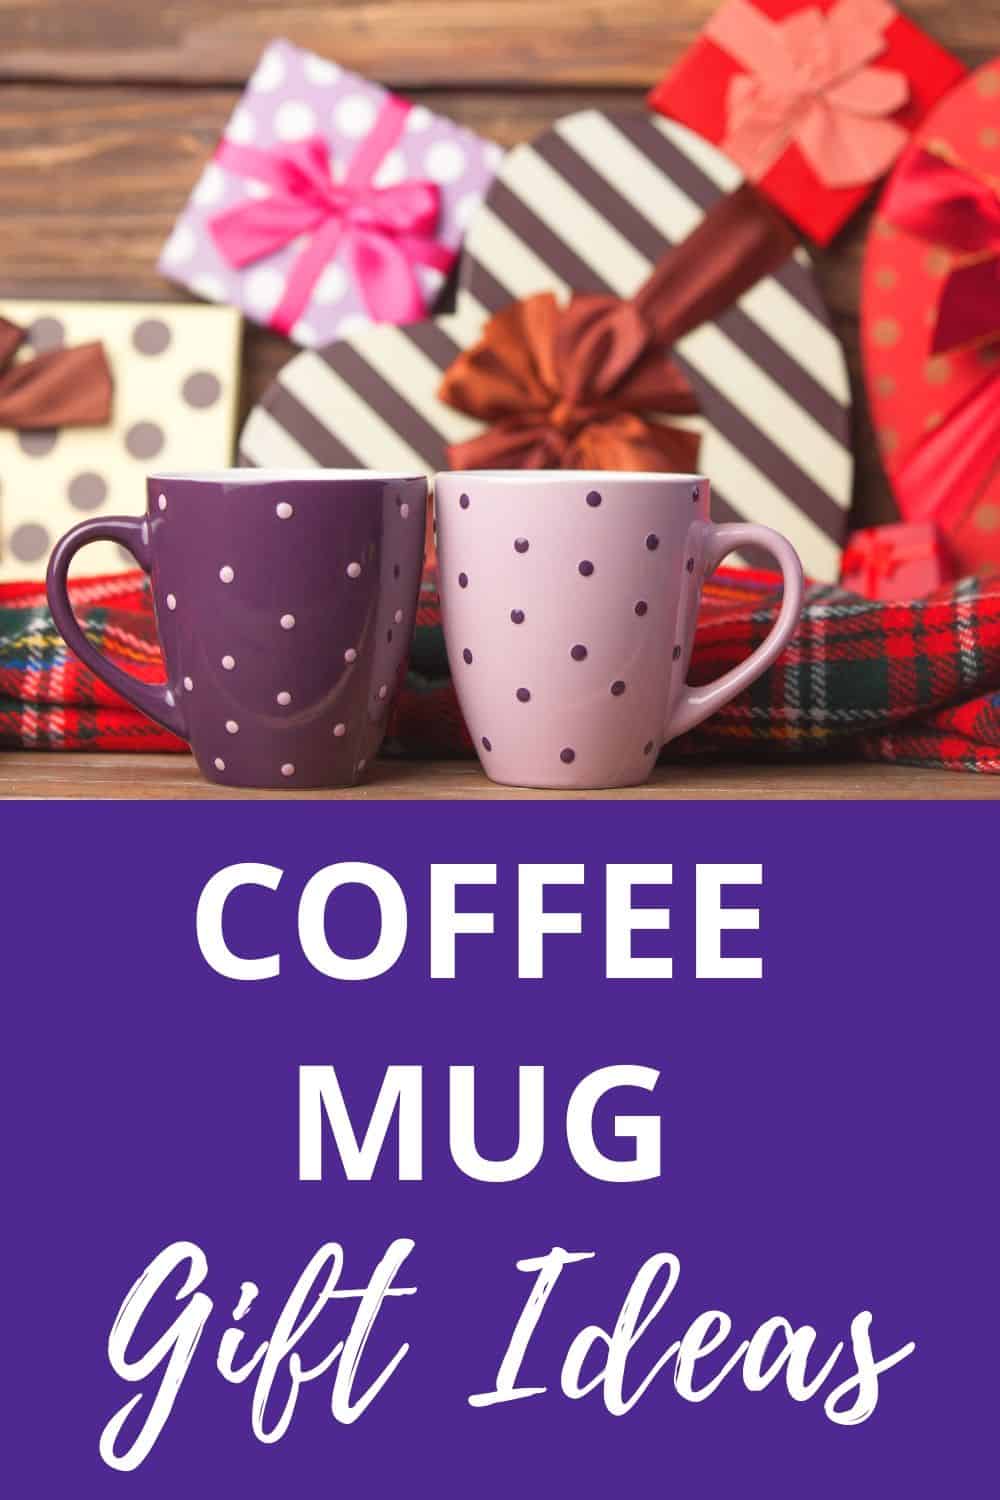 https://natashalh.com/wp-content/uploads/2018/12/coffee-mug-gift-ideas-1.jpg